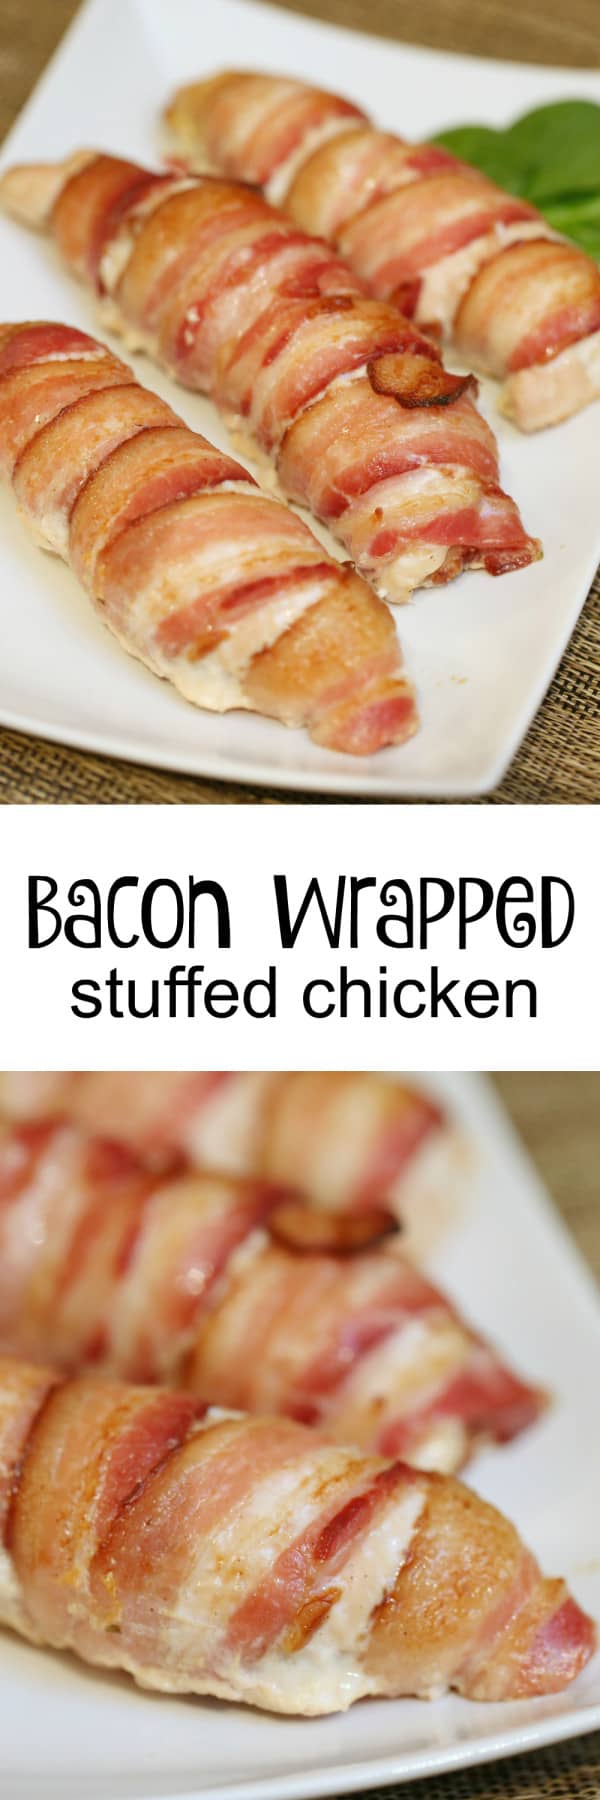 bacon wrapped stuffed chicken recipe